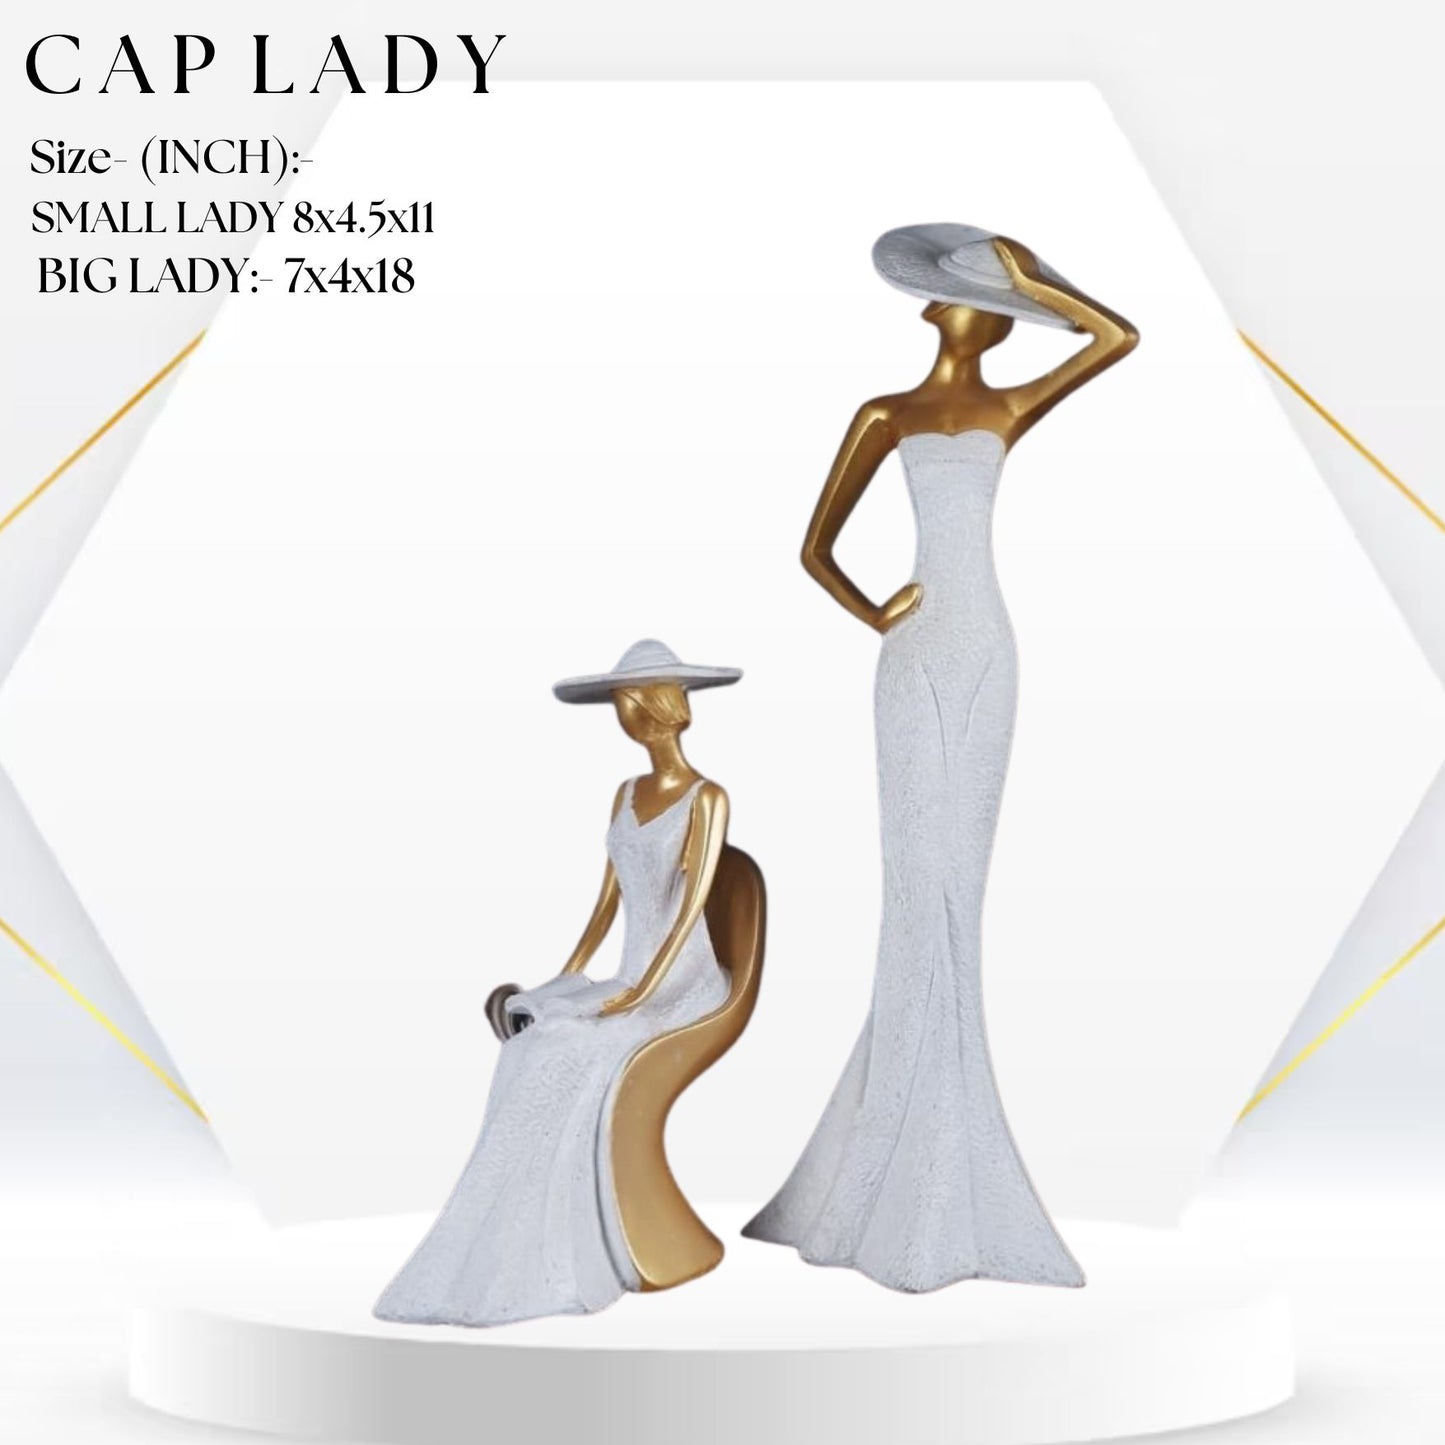 Cap Lady